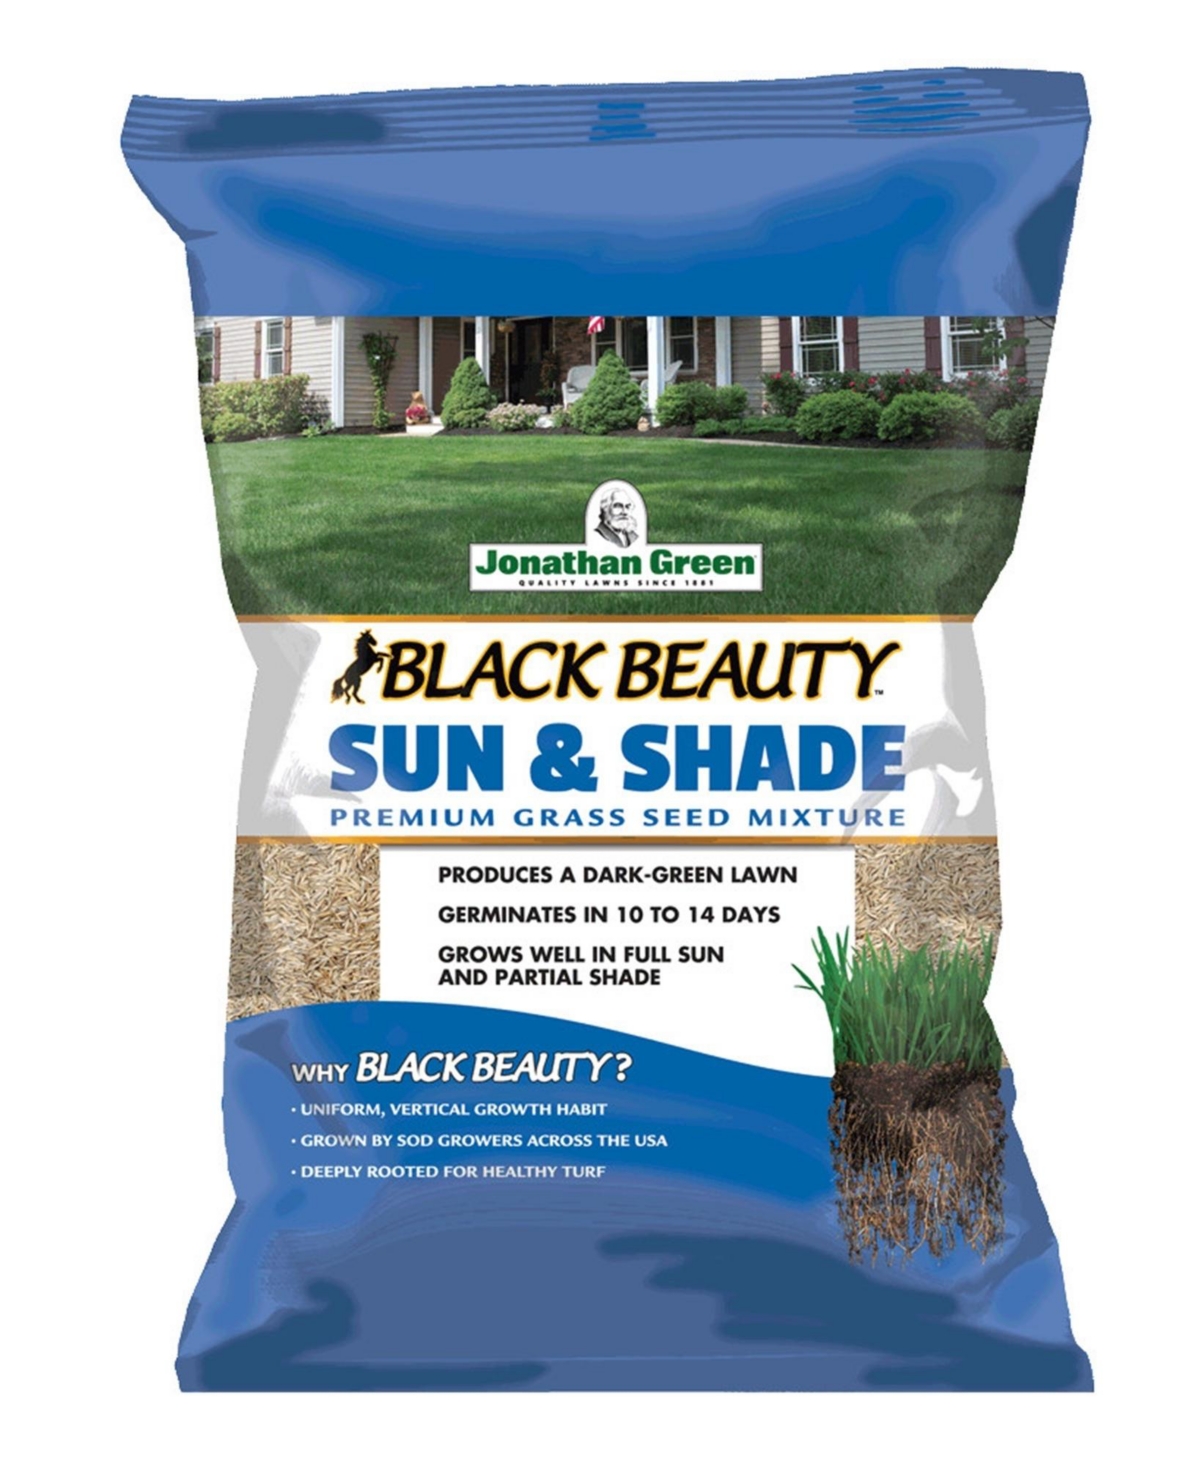 (#12001) Black Beauty Sun & Shade Grass Seed, 1lb bag - Brown